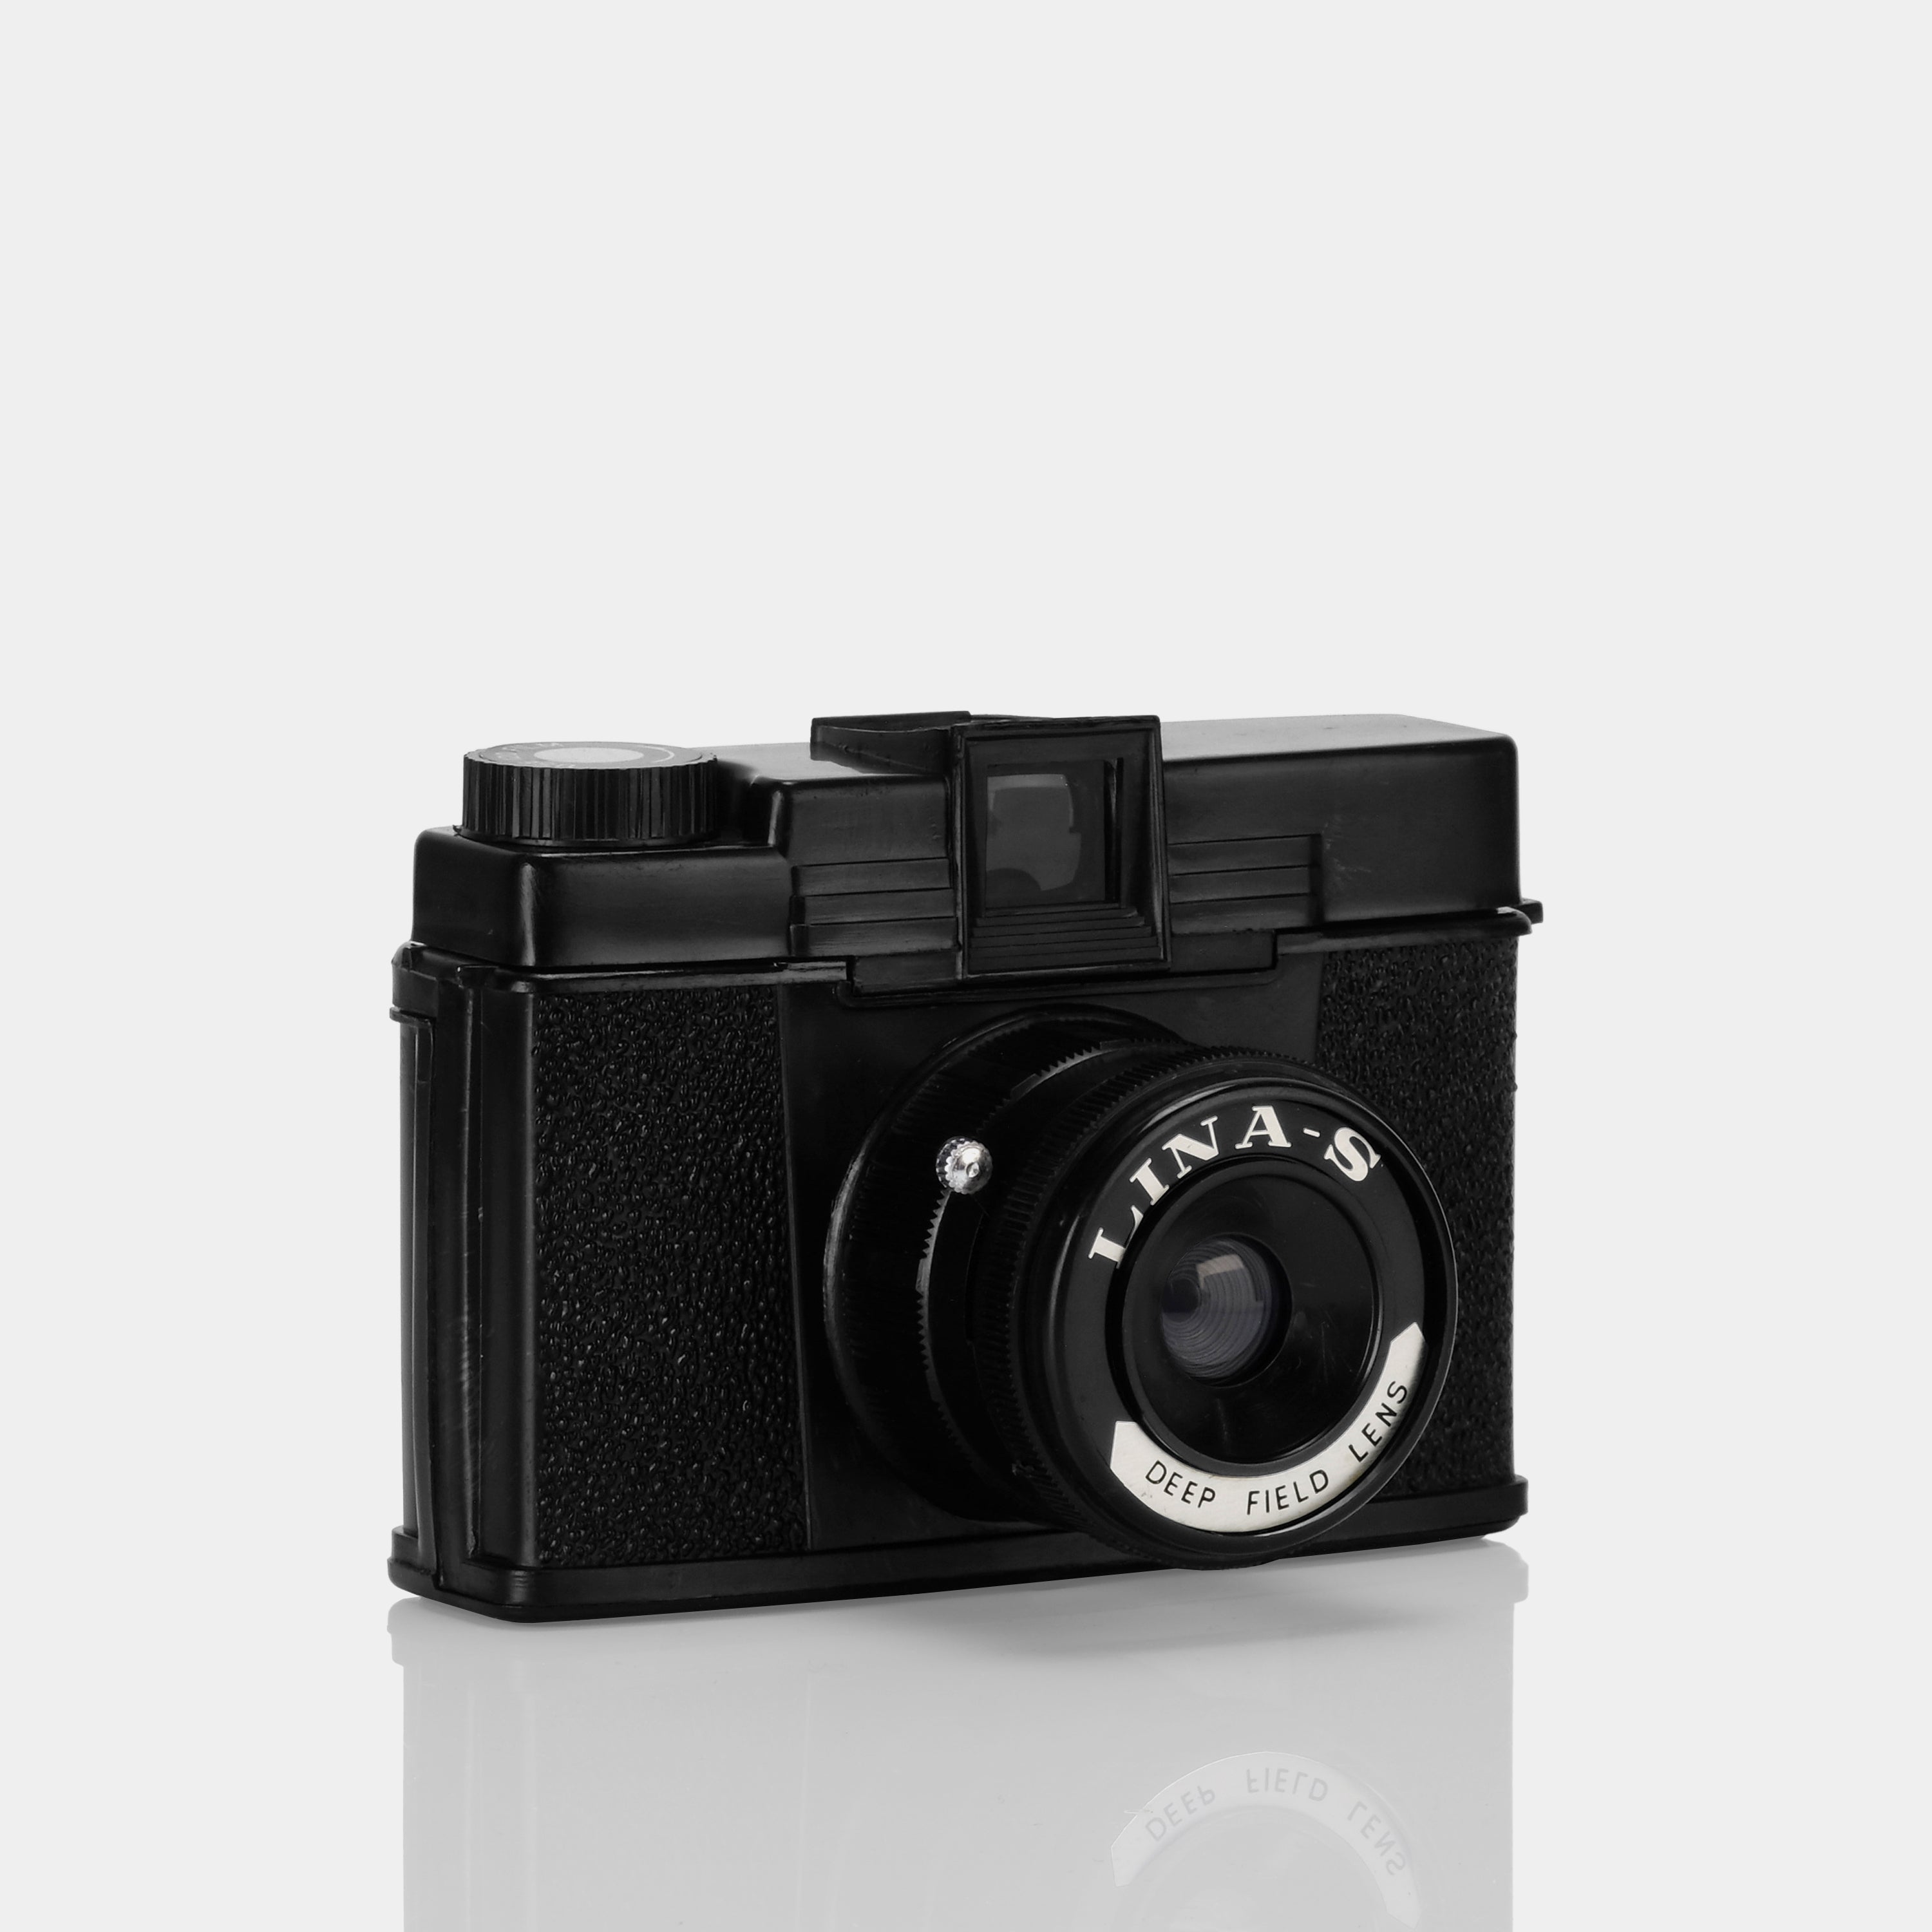 Lina-S 120 Film Camera